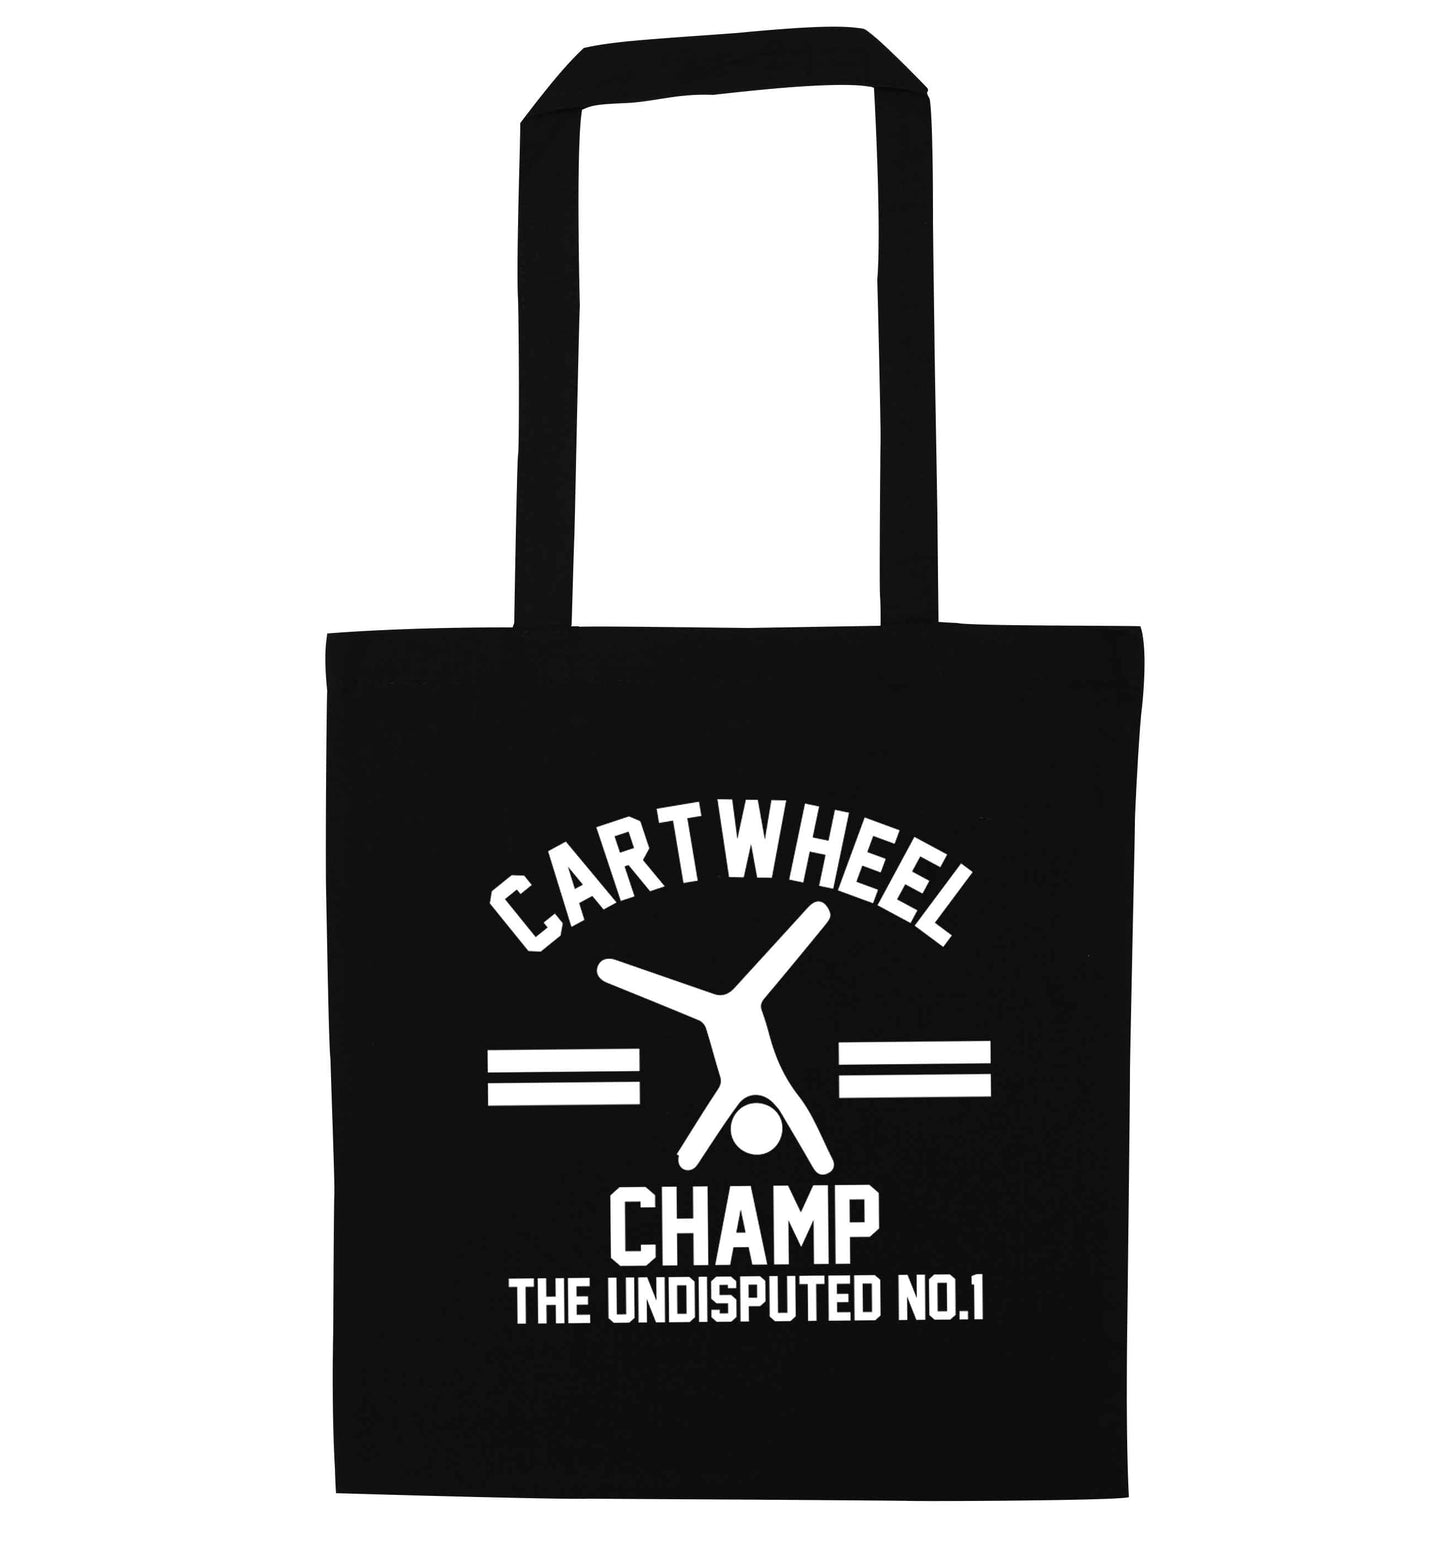 Undisputed cartwheel championship no.1  black tote bag